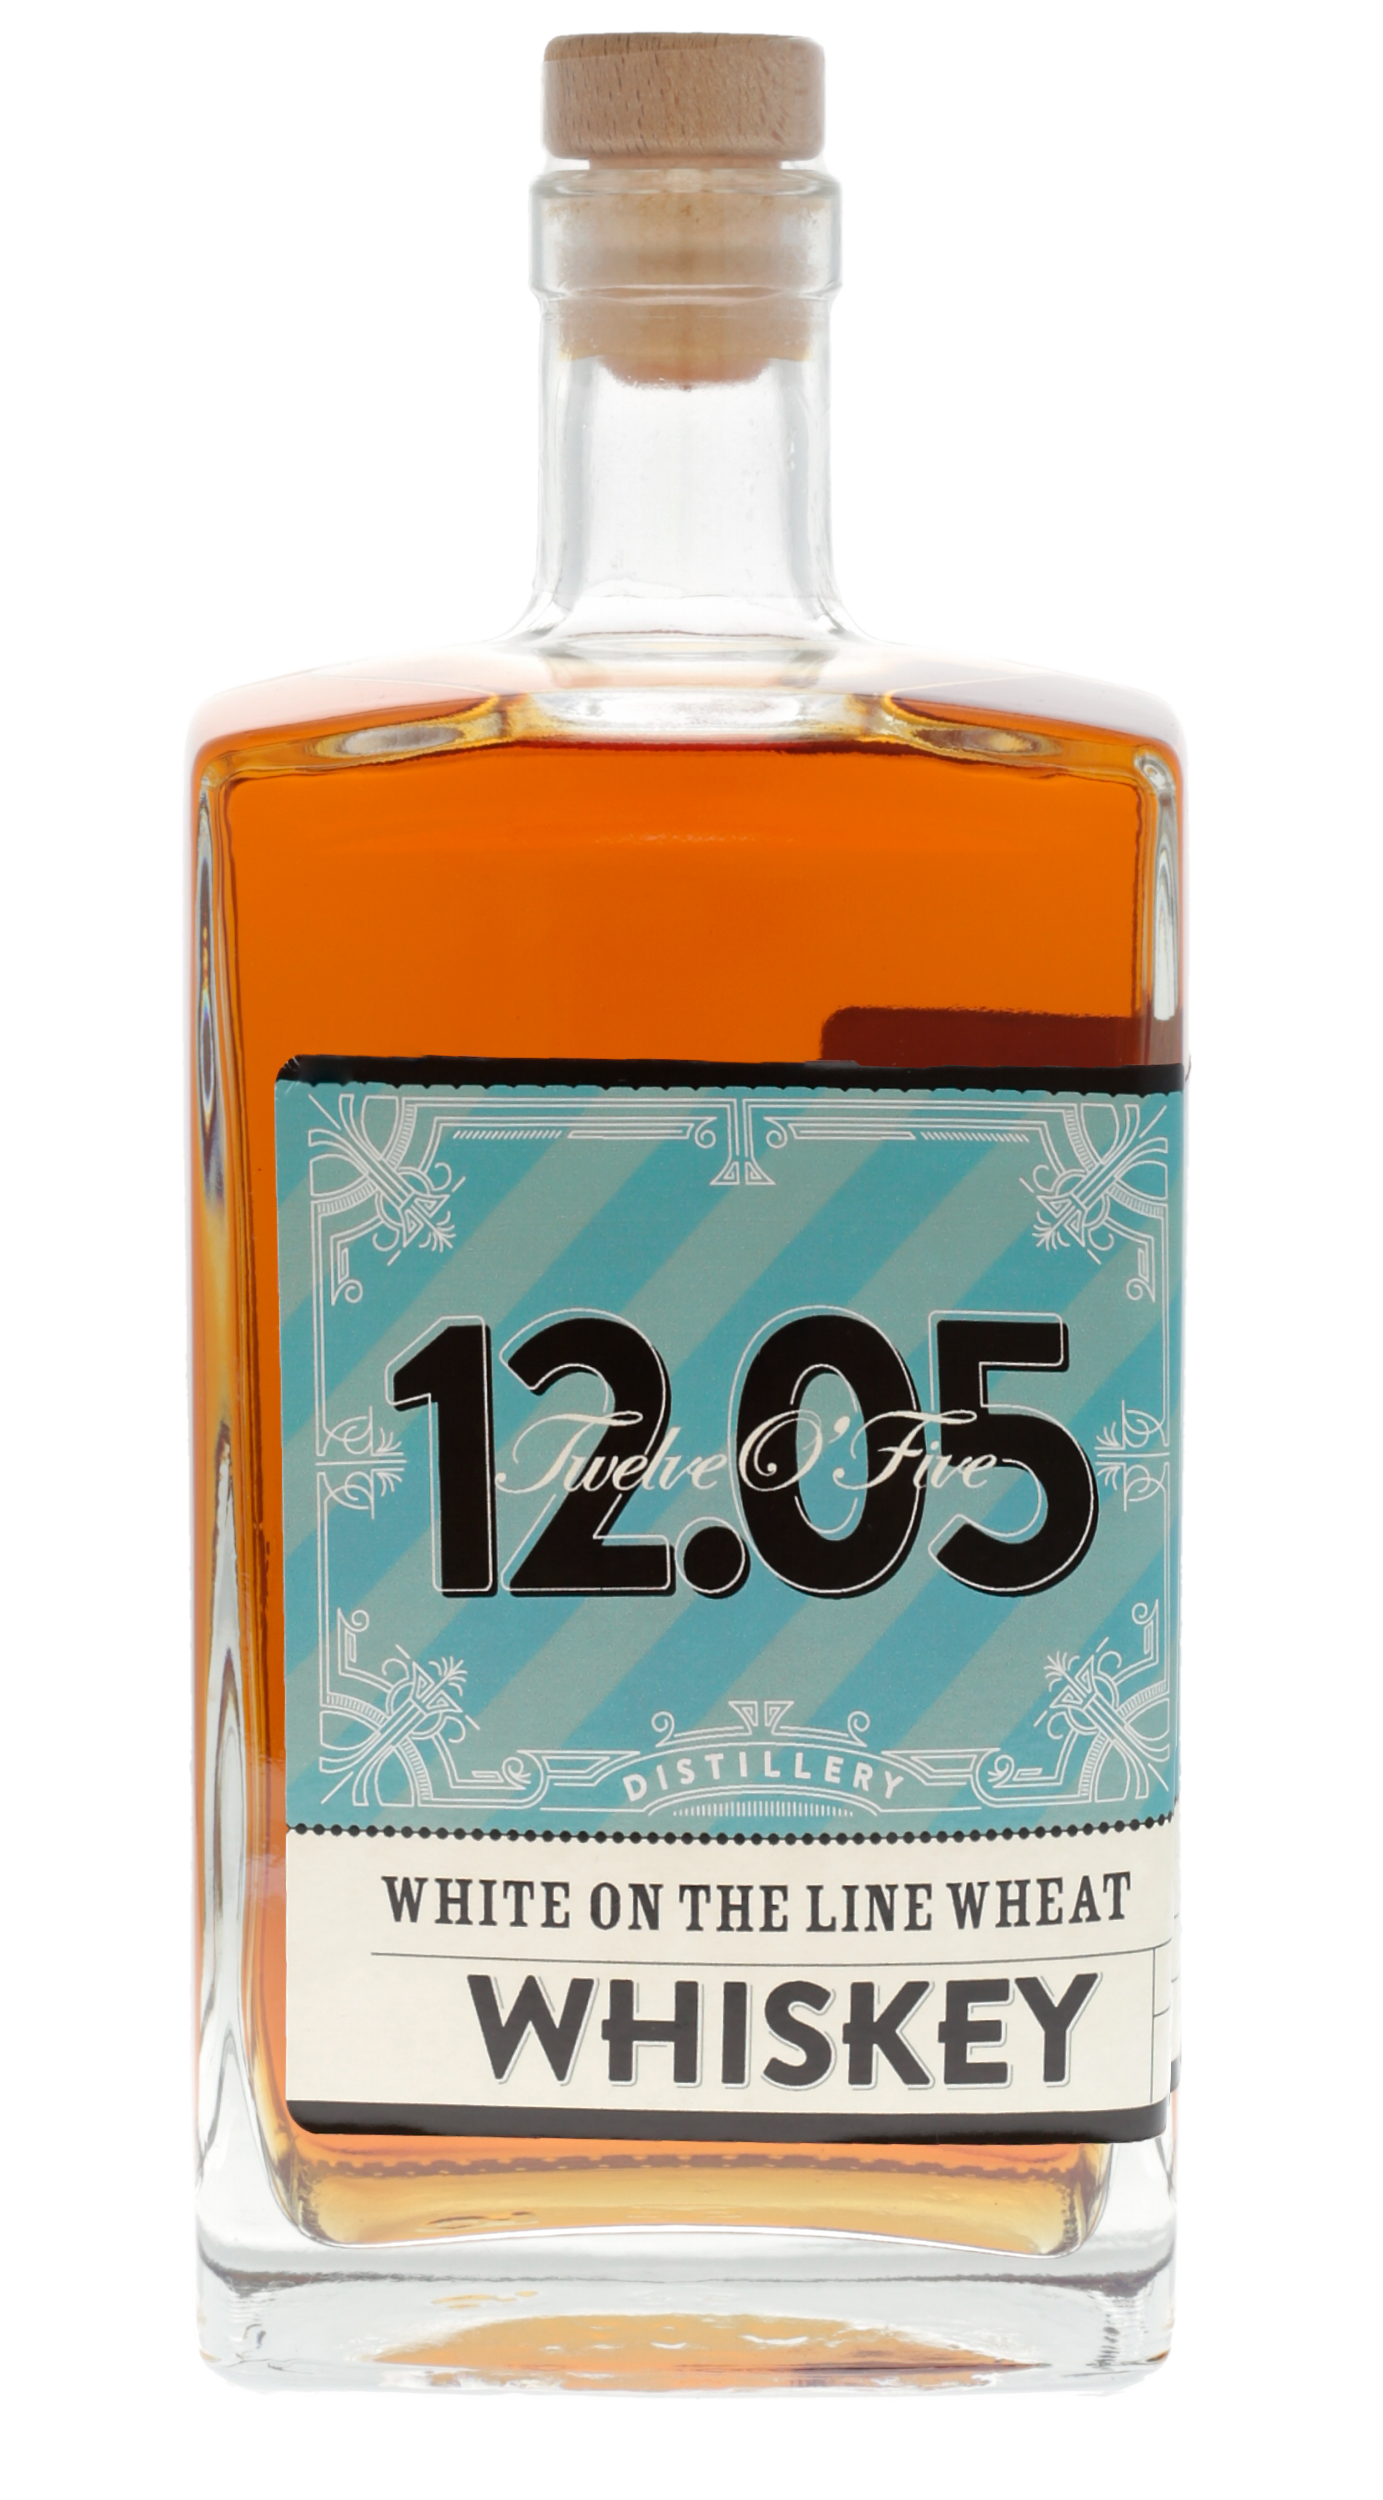 White on the Line Wheat Whiskey